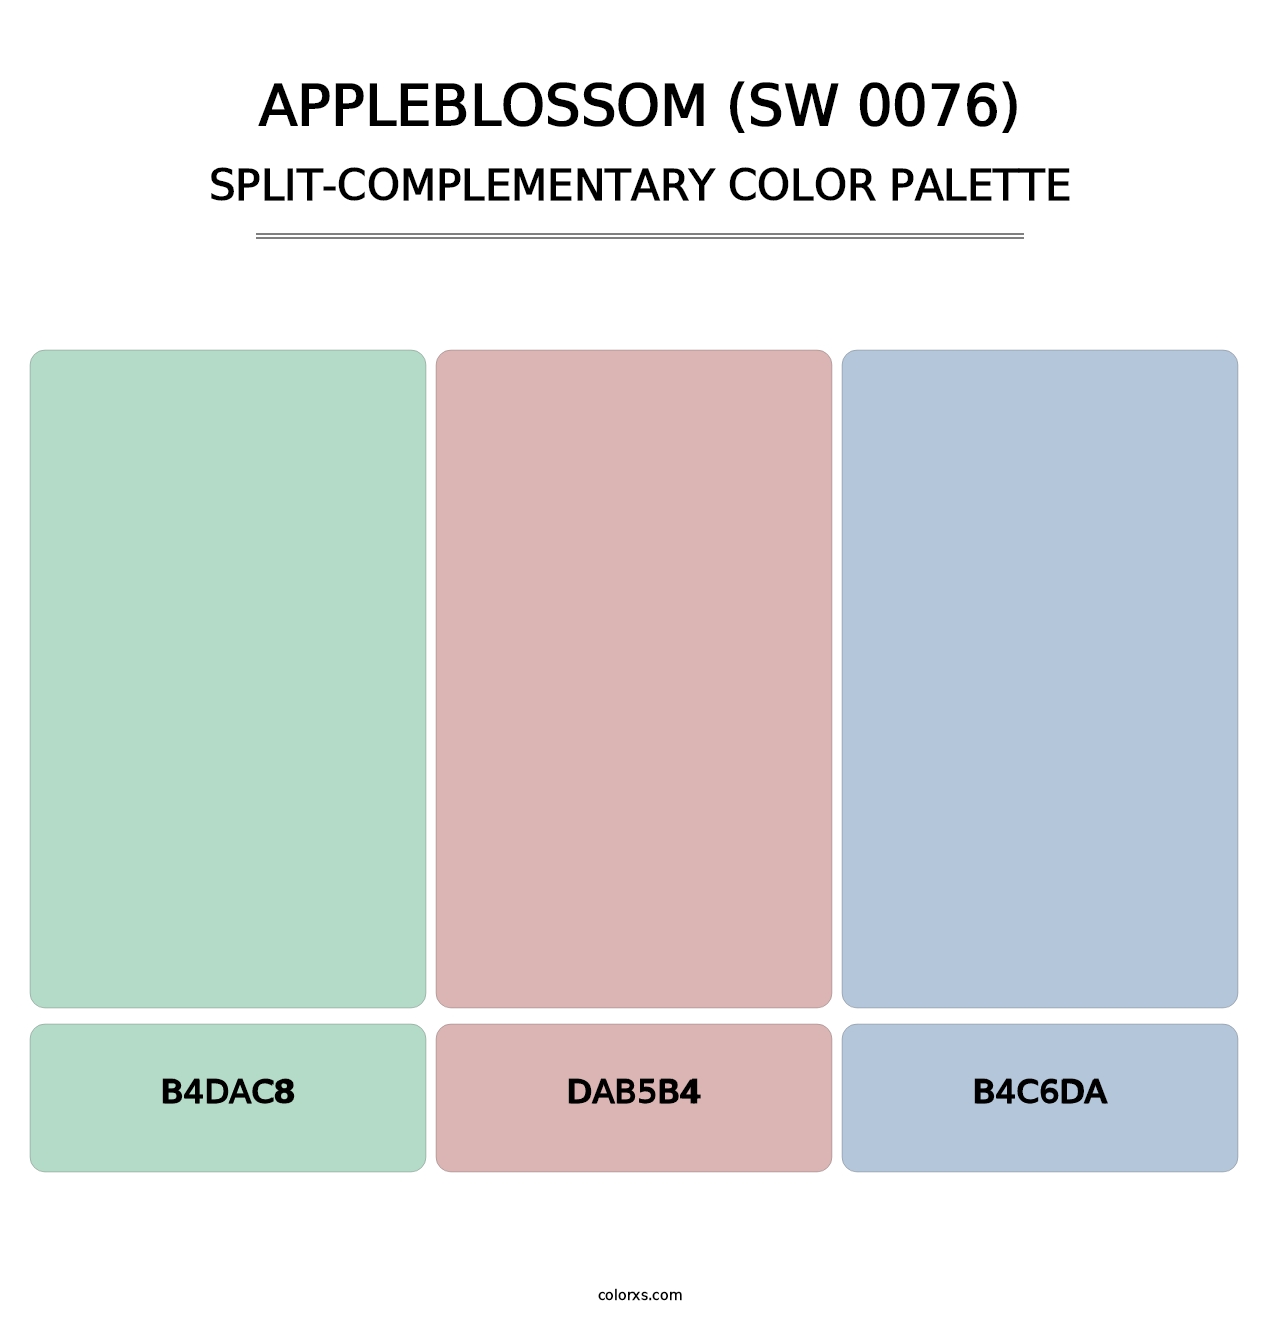 Appleblossom (SW 0076) - Split-Complementary Color Palette